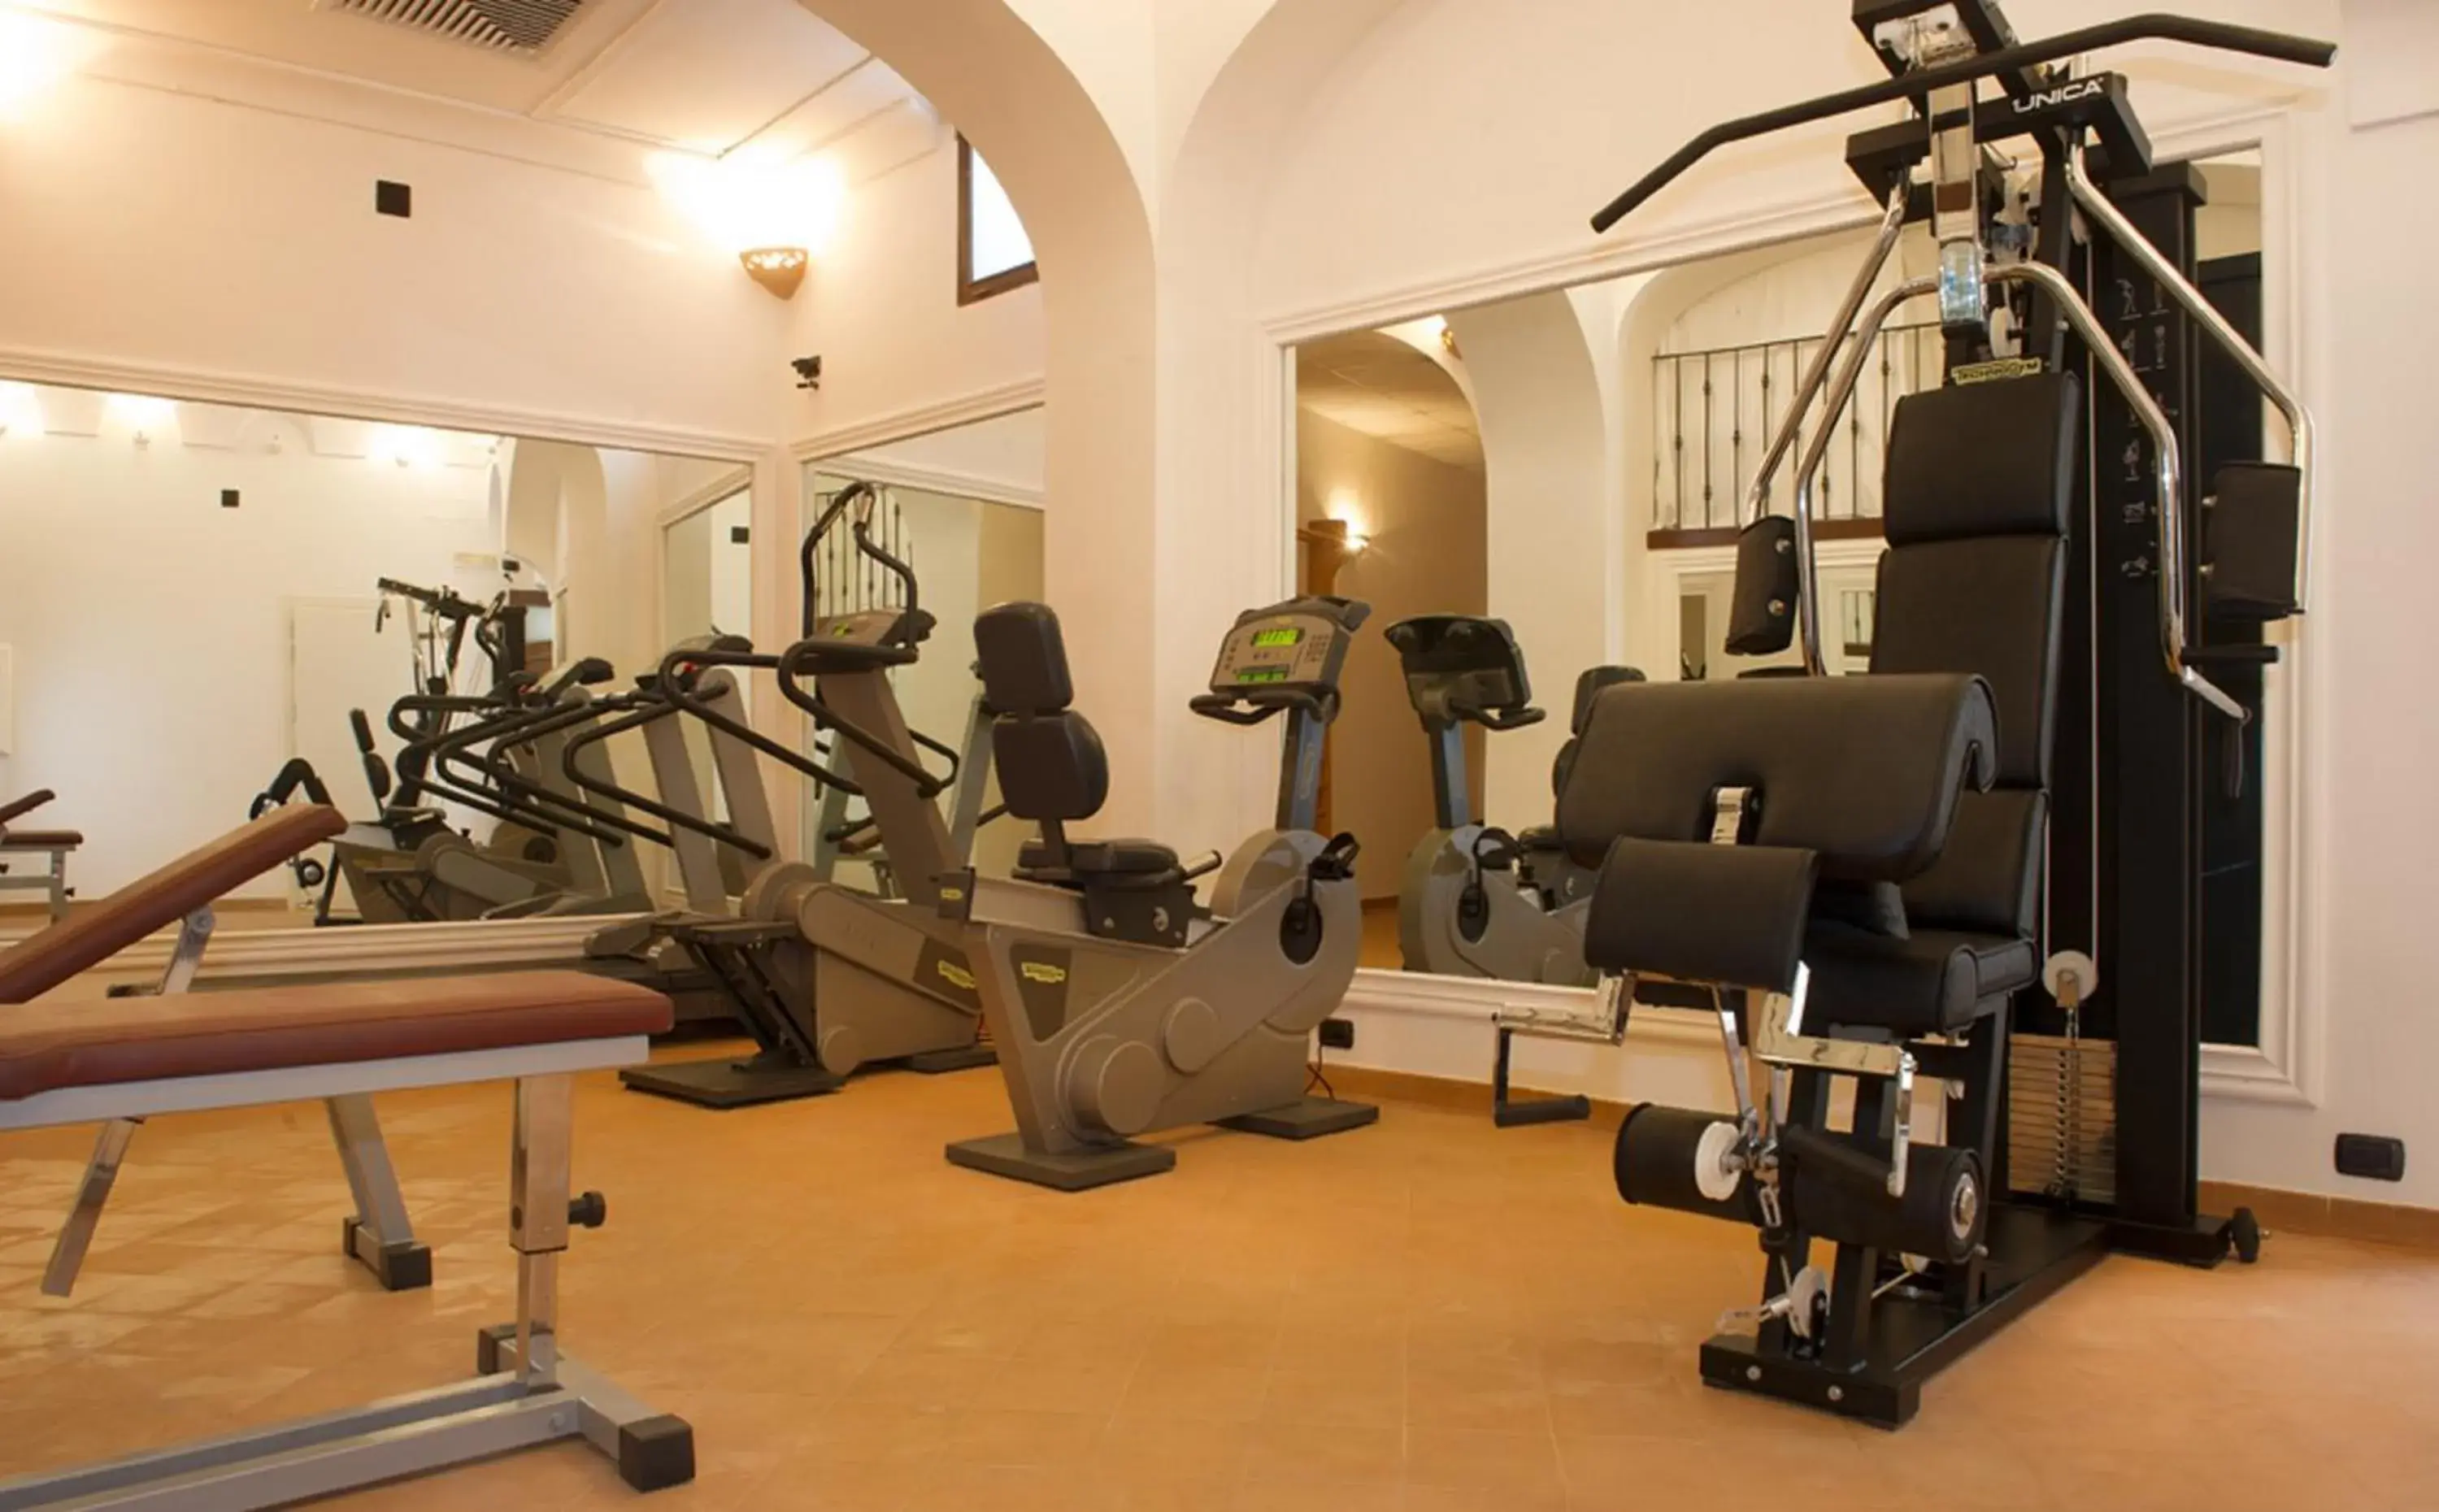 Fitness centre/facilities, Fitness Center/Facilities in Tramonto d'Oro